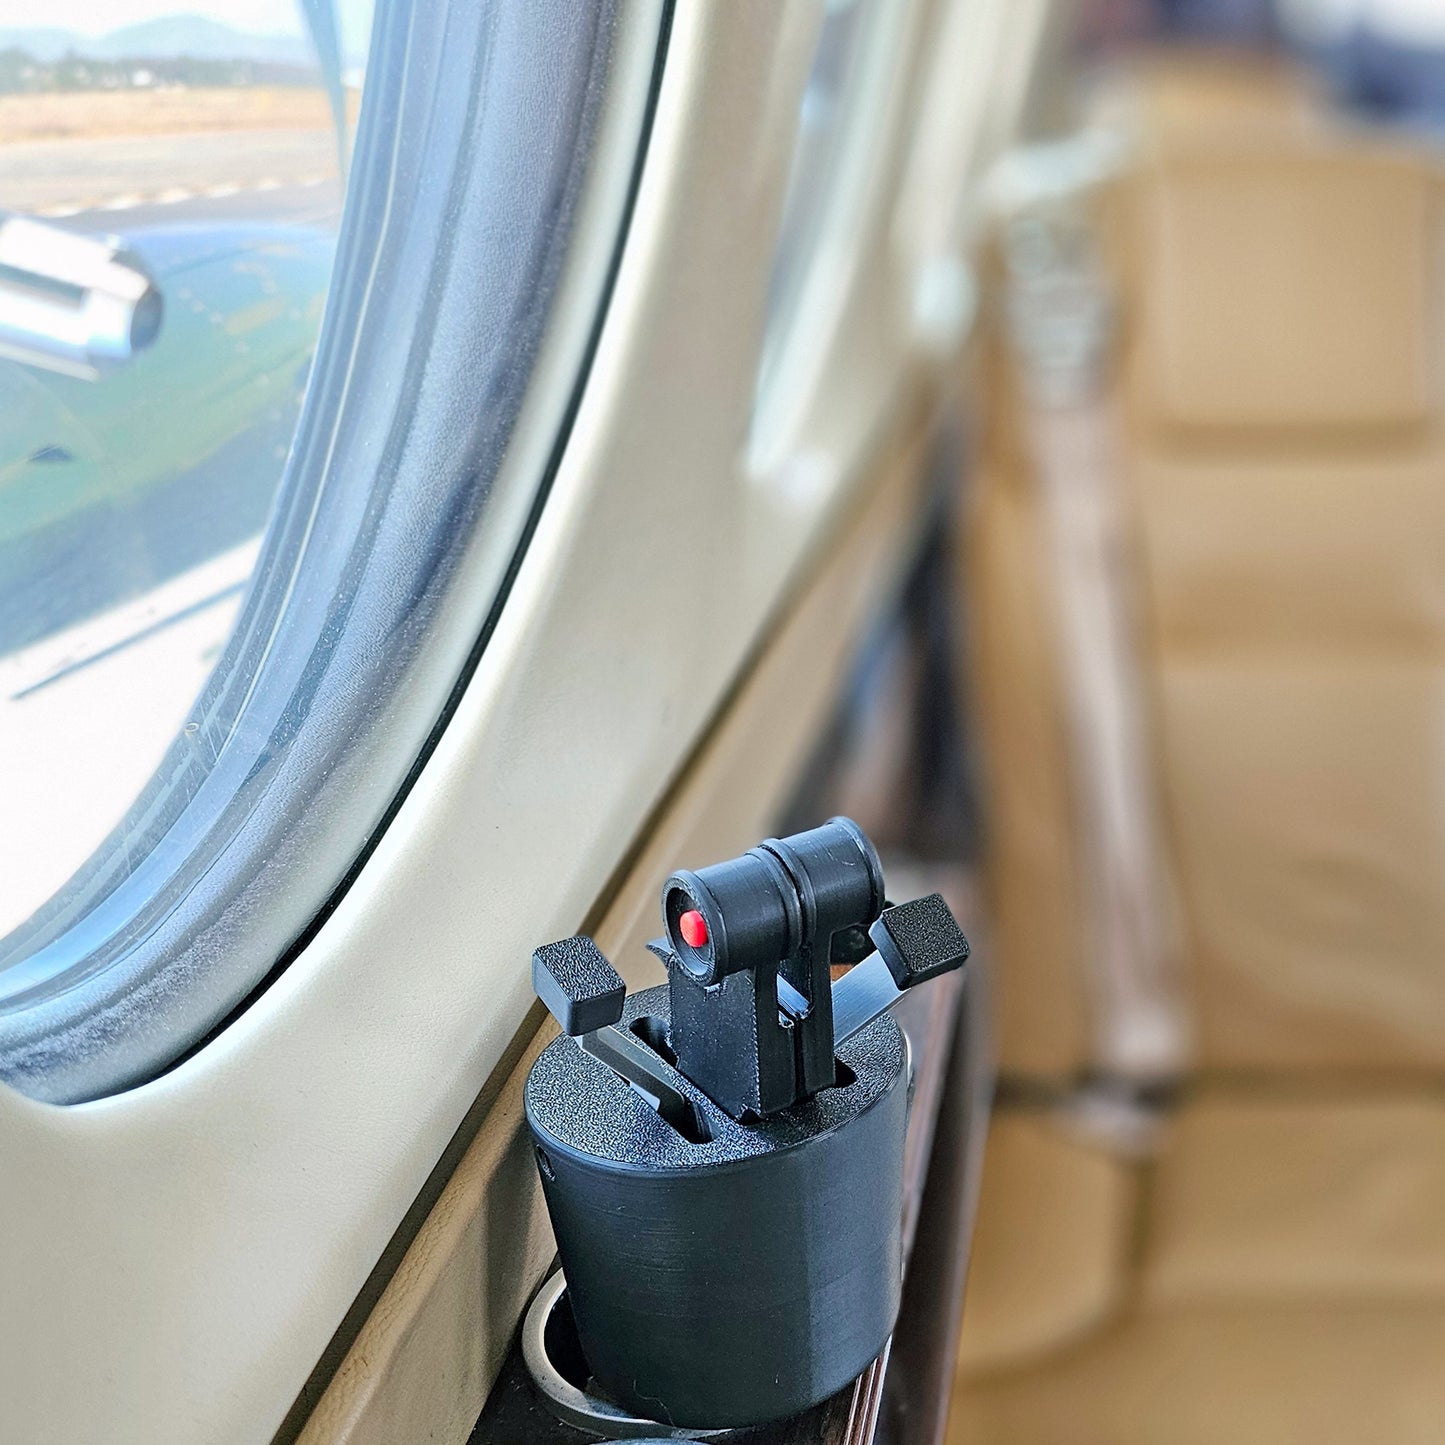 Desk Cup Holder, AirBus 320 - The Cup Holder Flight Fidget